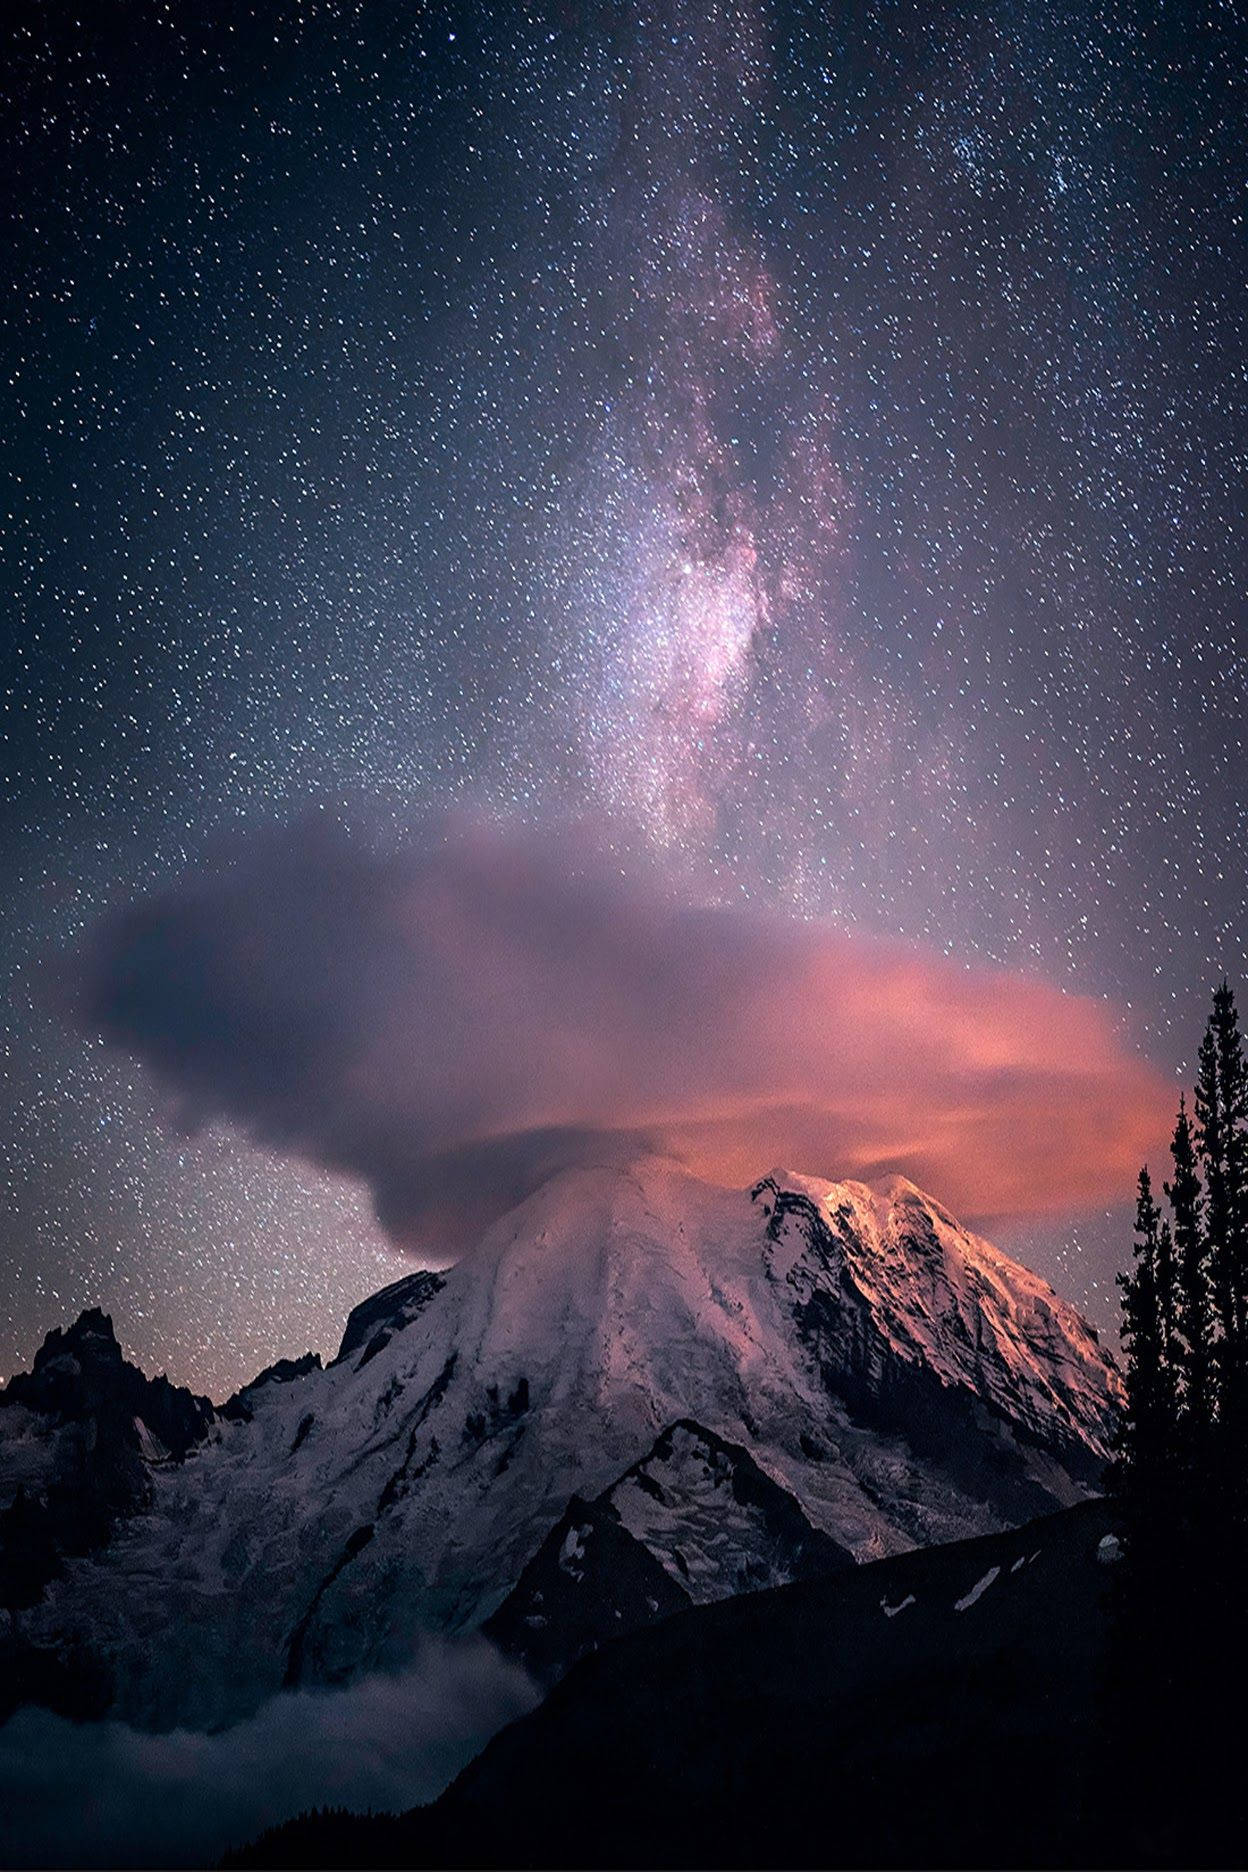 Snowy mountain peak on a starry night Iphone wallpaper